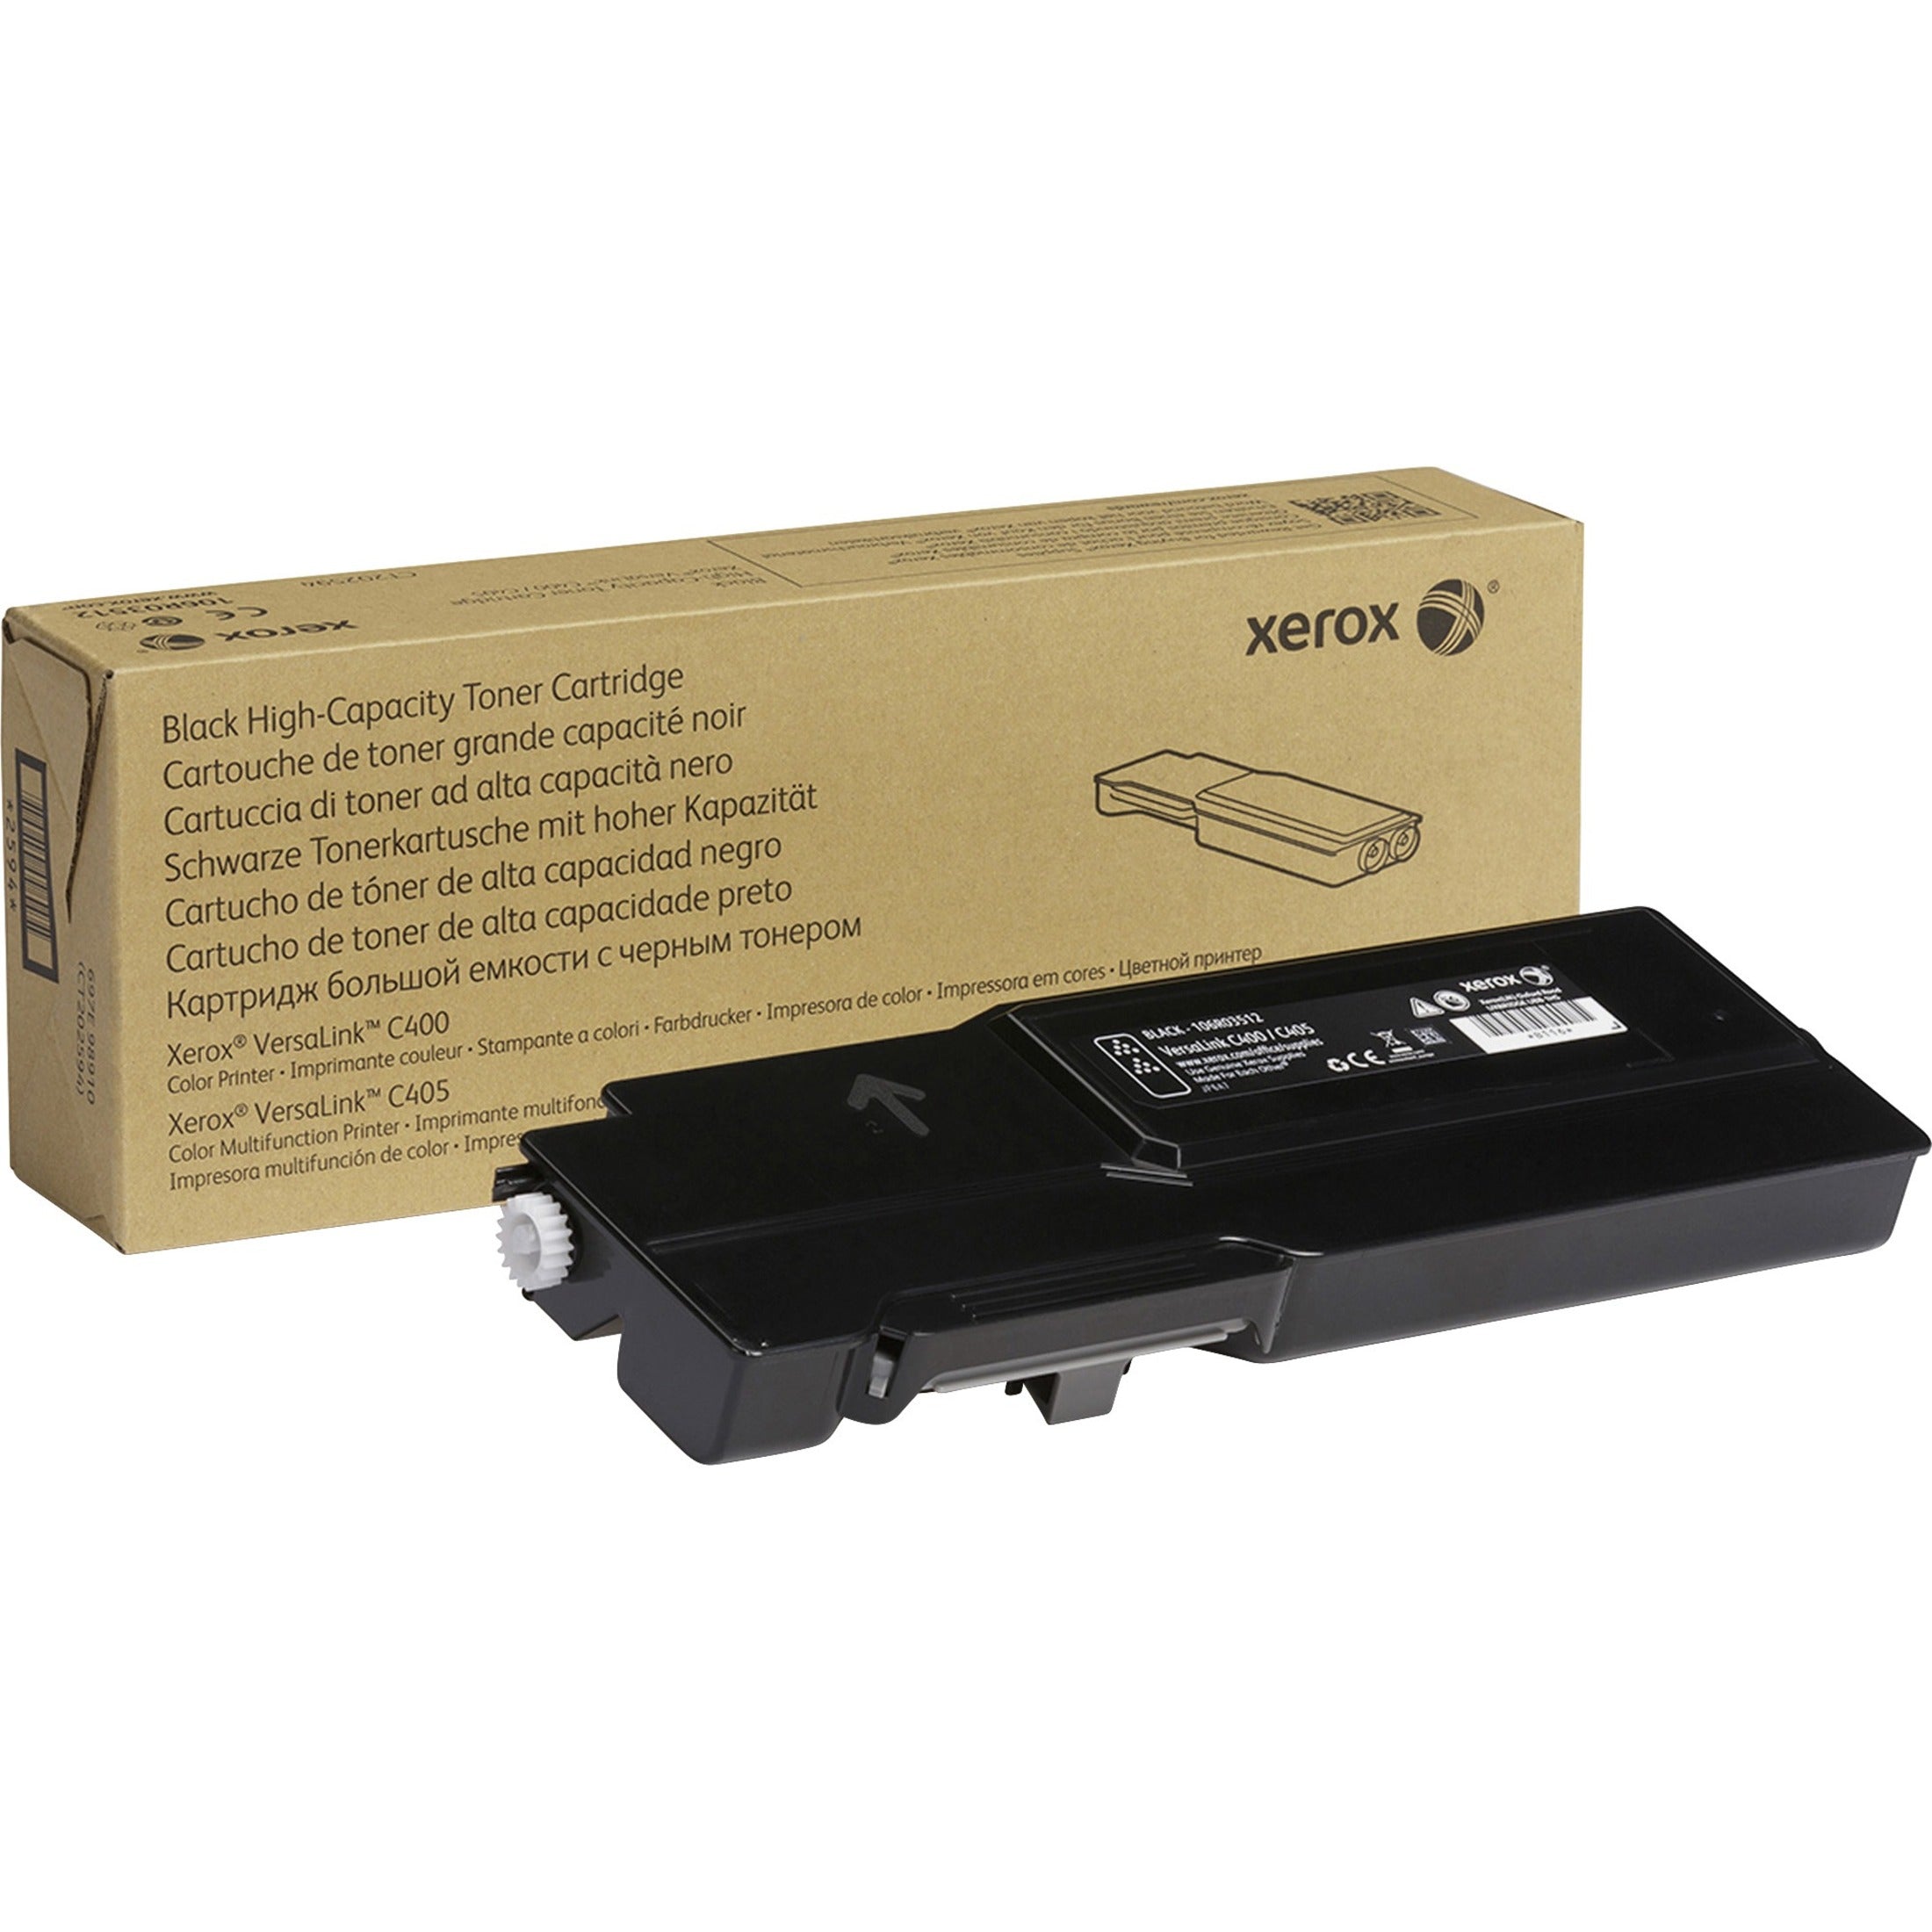 Xerox 106R03512 Genuine Black High Capacity Toner Cartridge For The VersaLink C400/C405, 5000 Page Yield